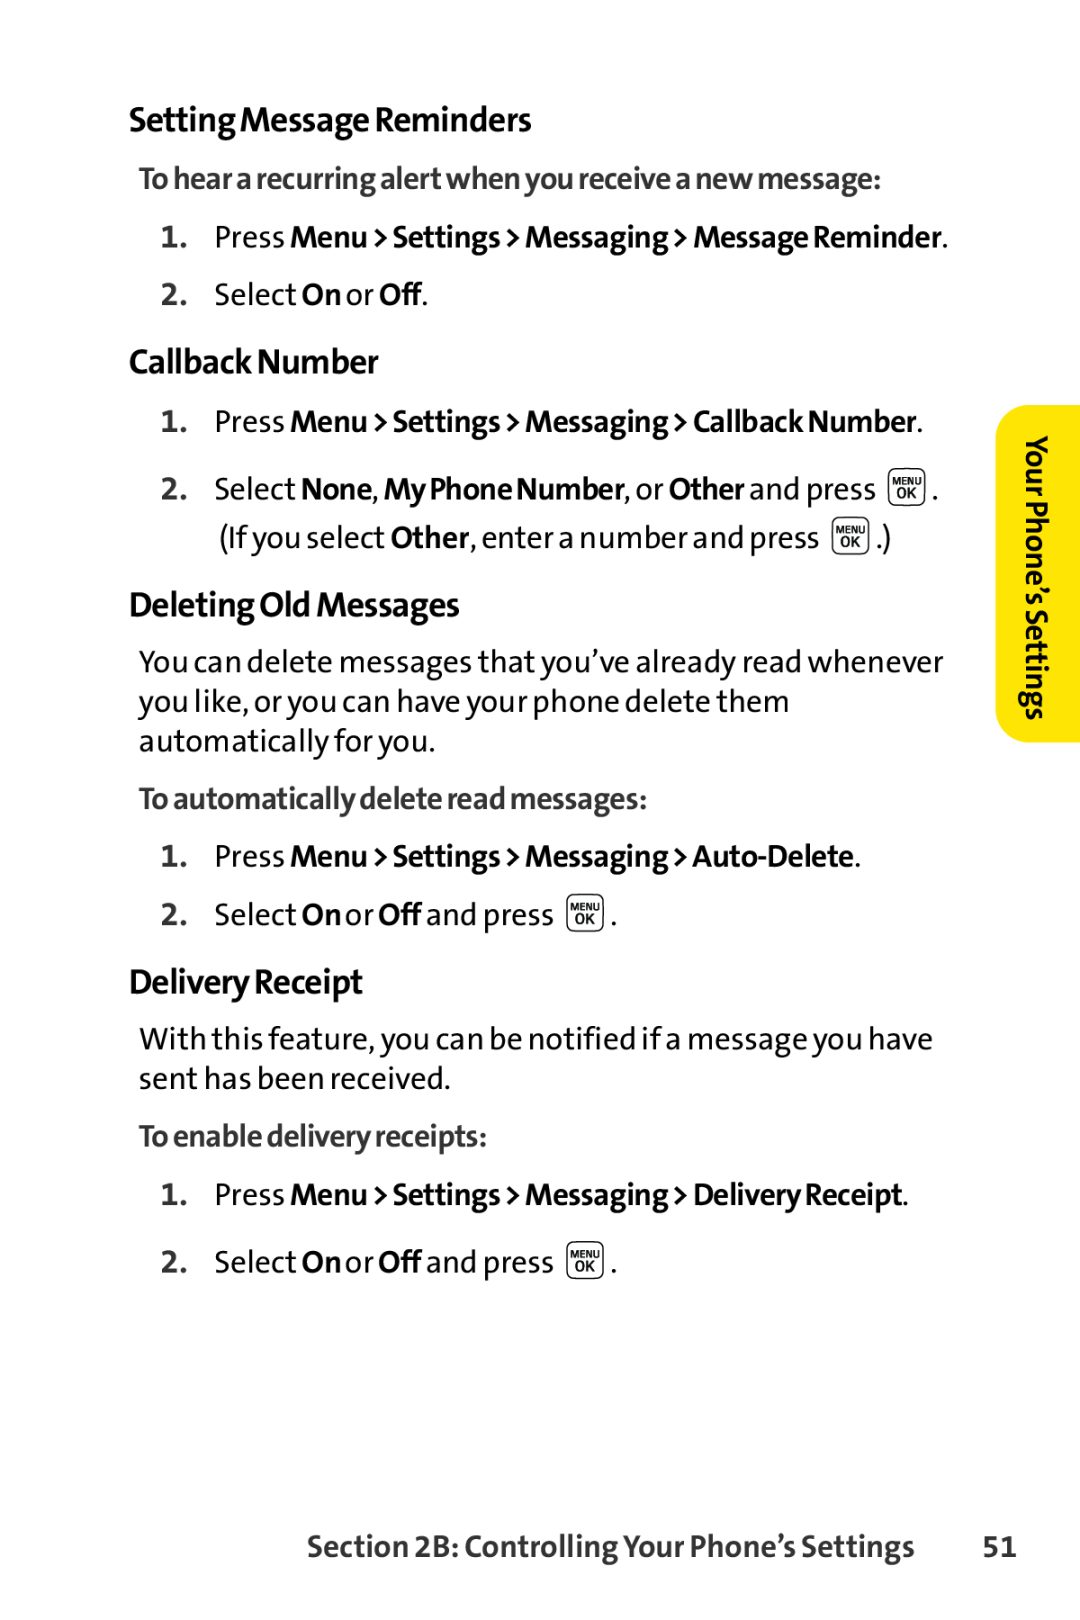 Sprint Nextel LX160 SettingMessageReminders, CallbackNumber, DeletingOldMessages, DeliveryReceipt, Your Phone’s Settings 